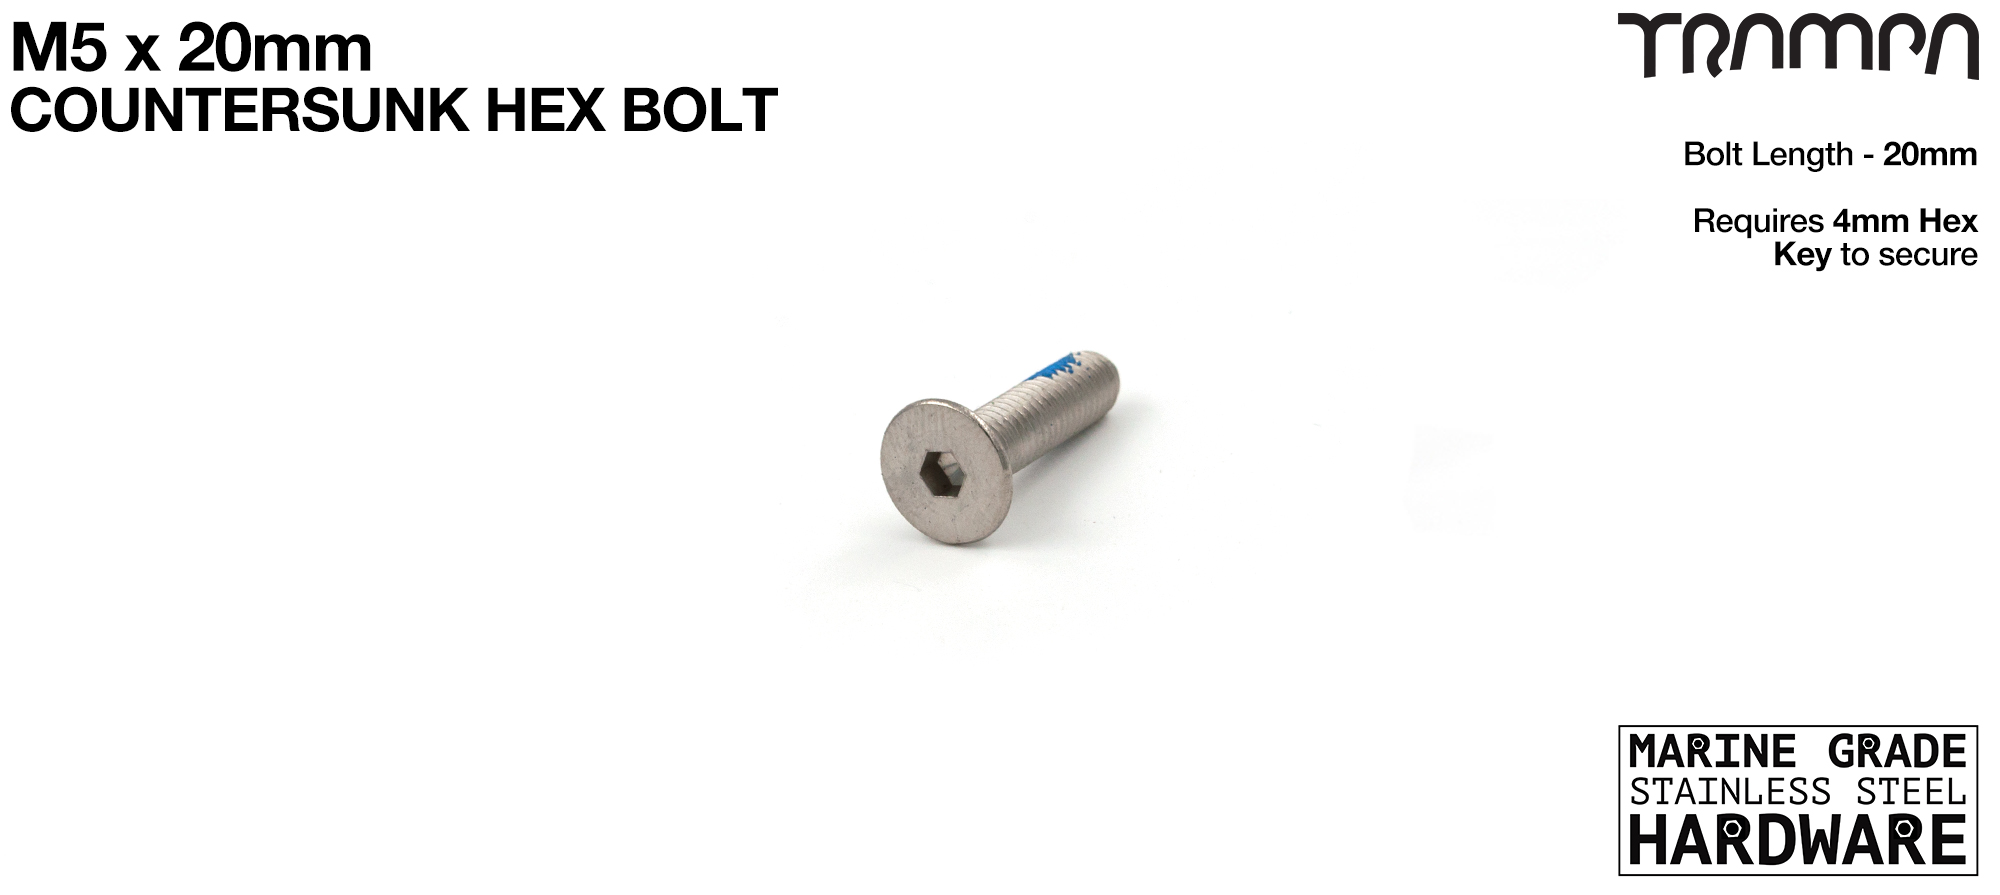 M5 x 20mm Countersunk Allen-Key Bolt - Marine Grade Stainless steel with locking paste